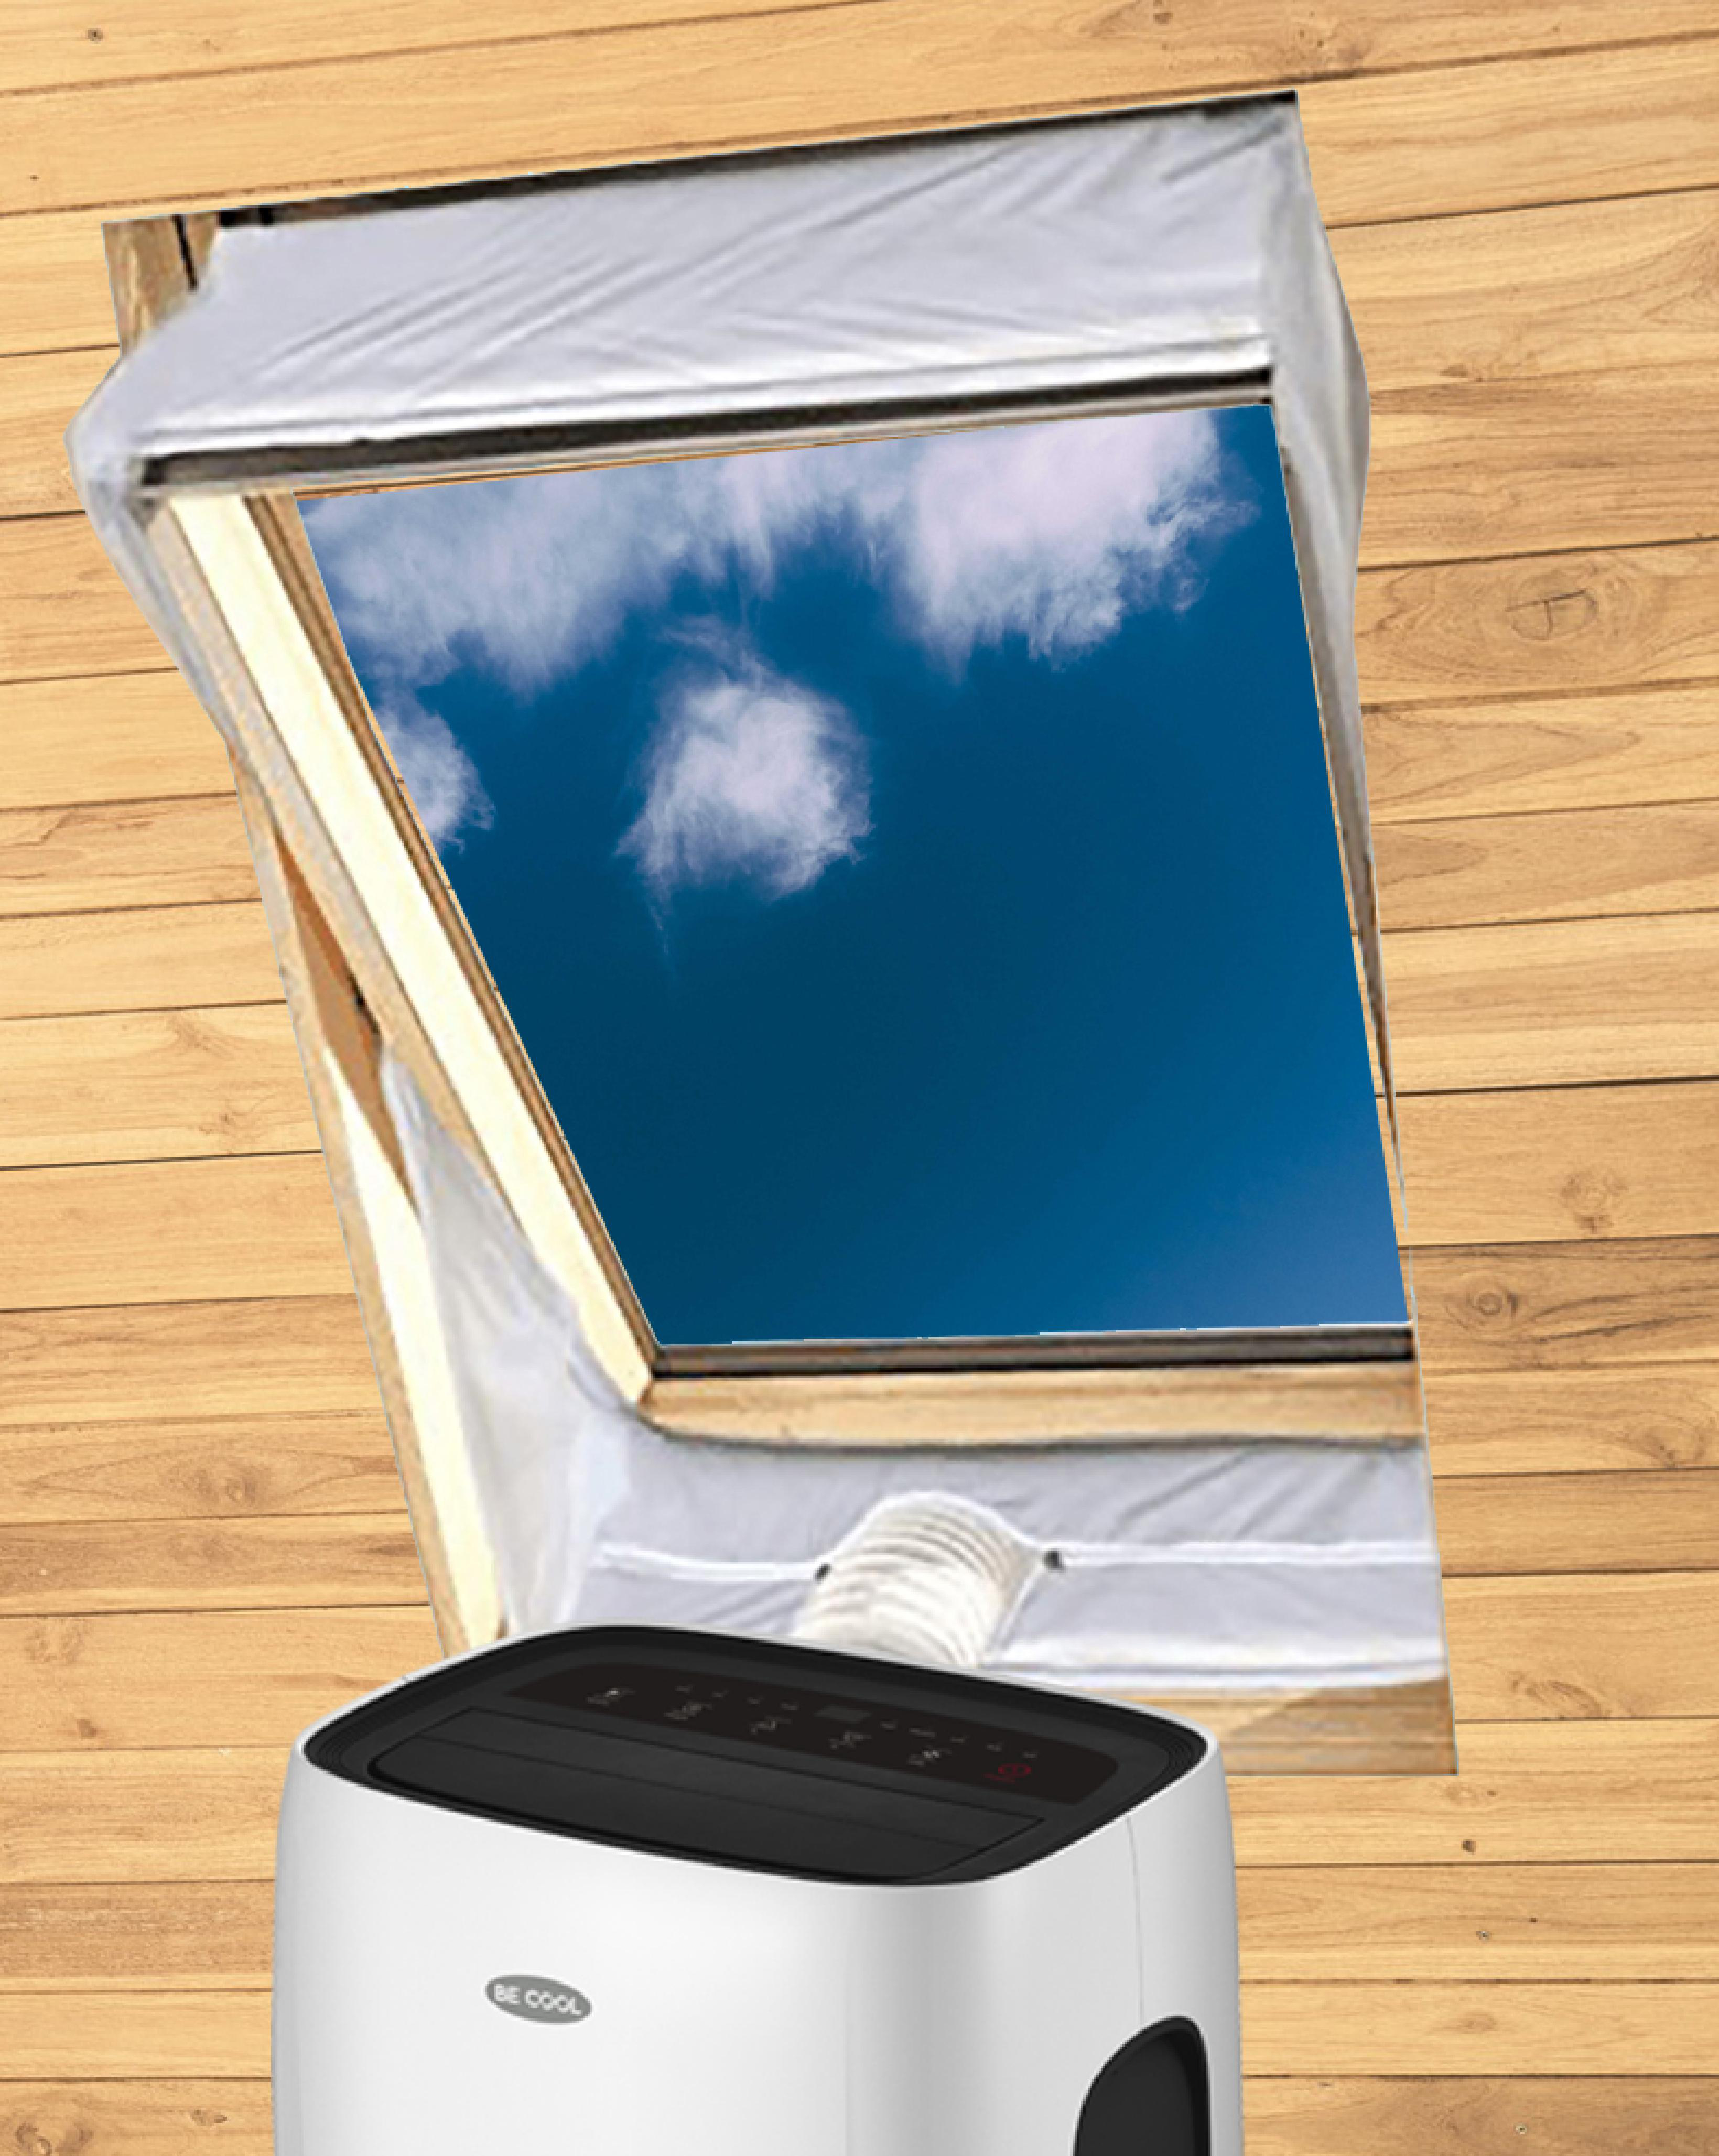 BECOOL HOT AIR Hot STOP Air Dachfenster Dachfenster - Stop für